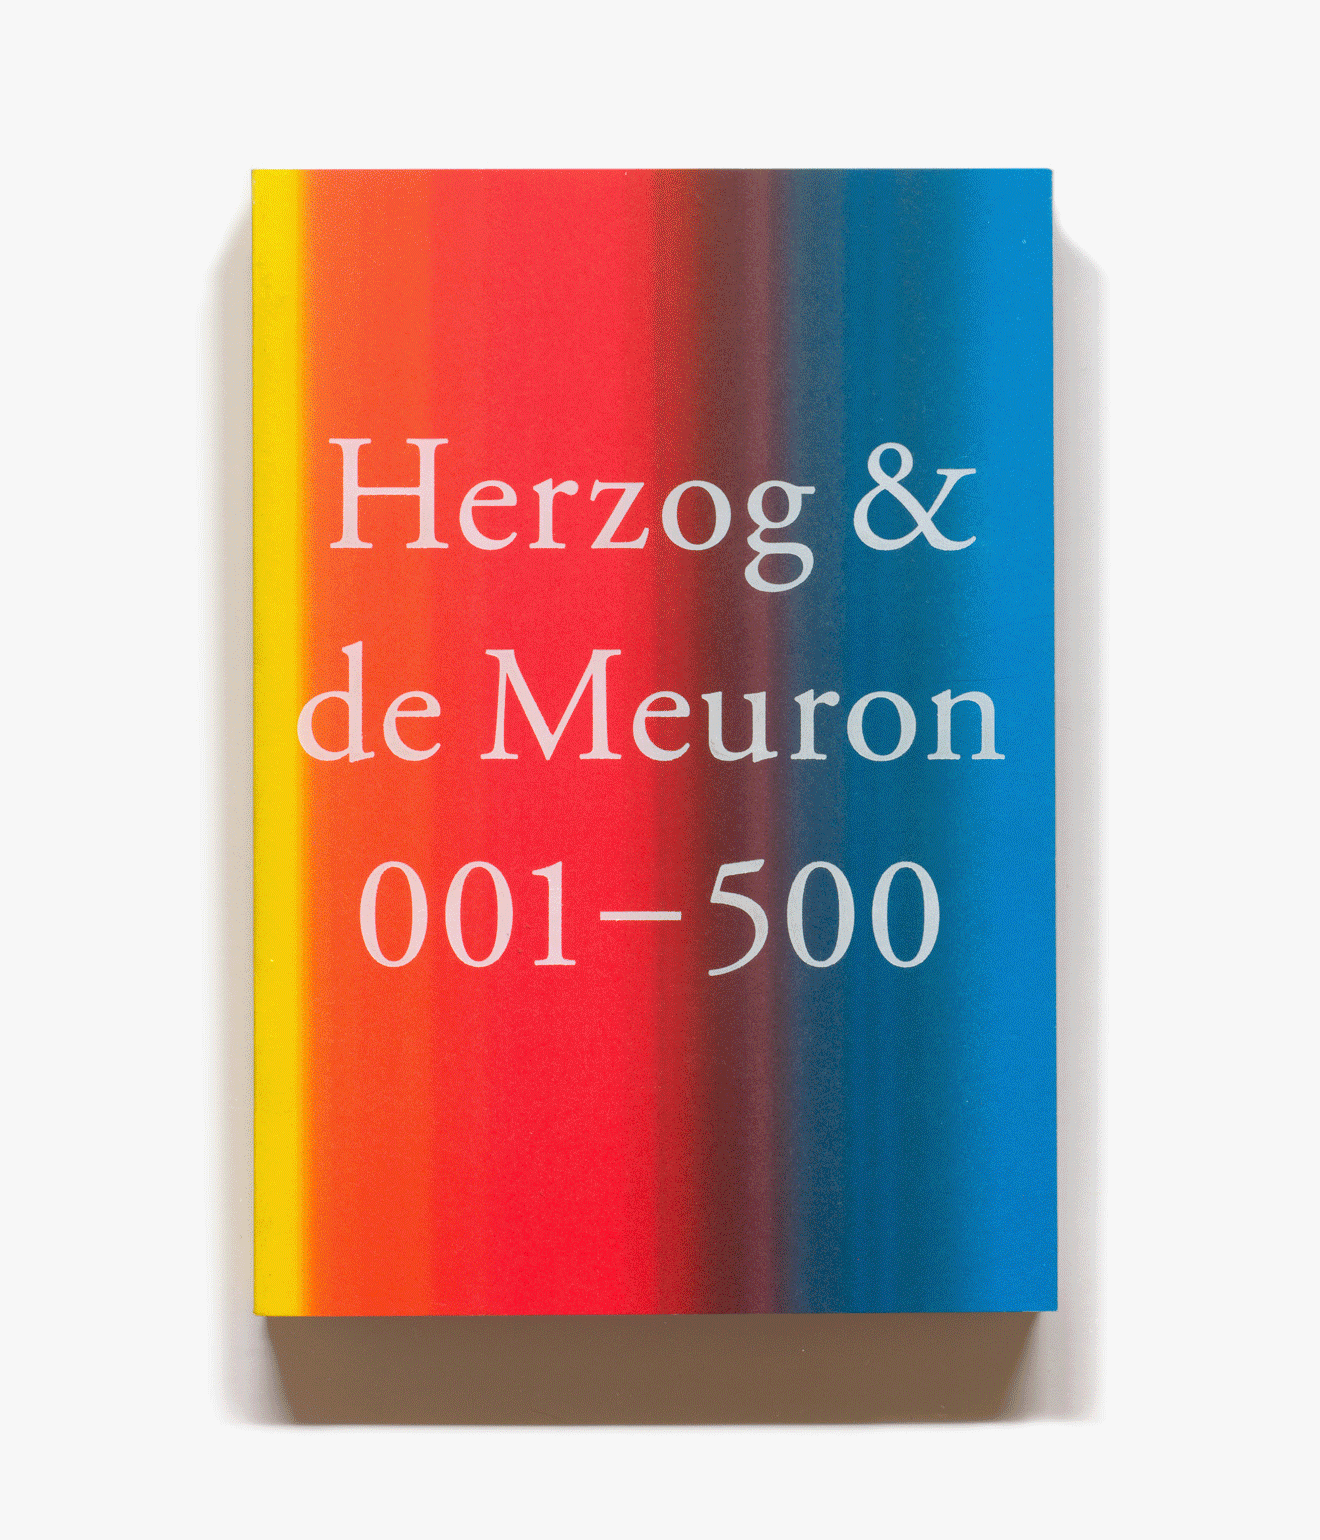 Simonett & Baer Indexes The Work Of Herzog & De Meuron - Book Cover - HD Wallpaper 